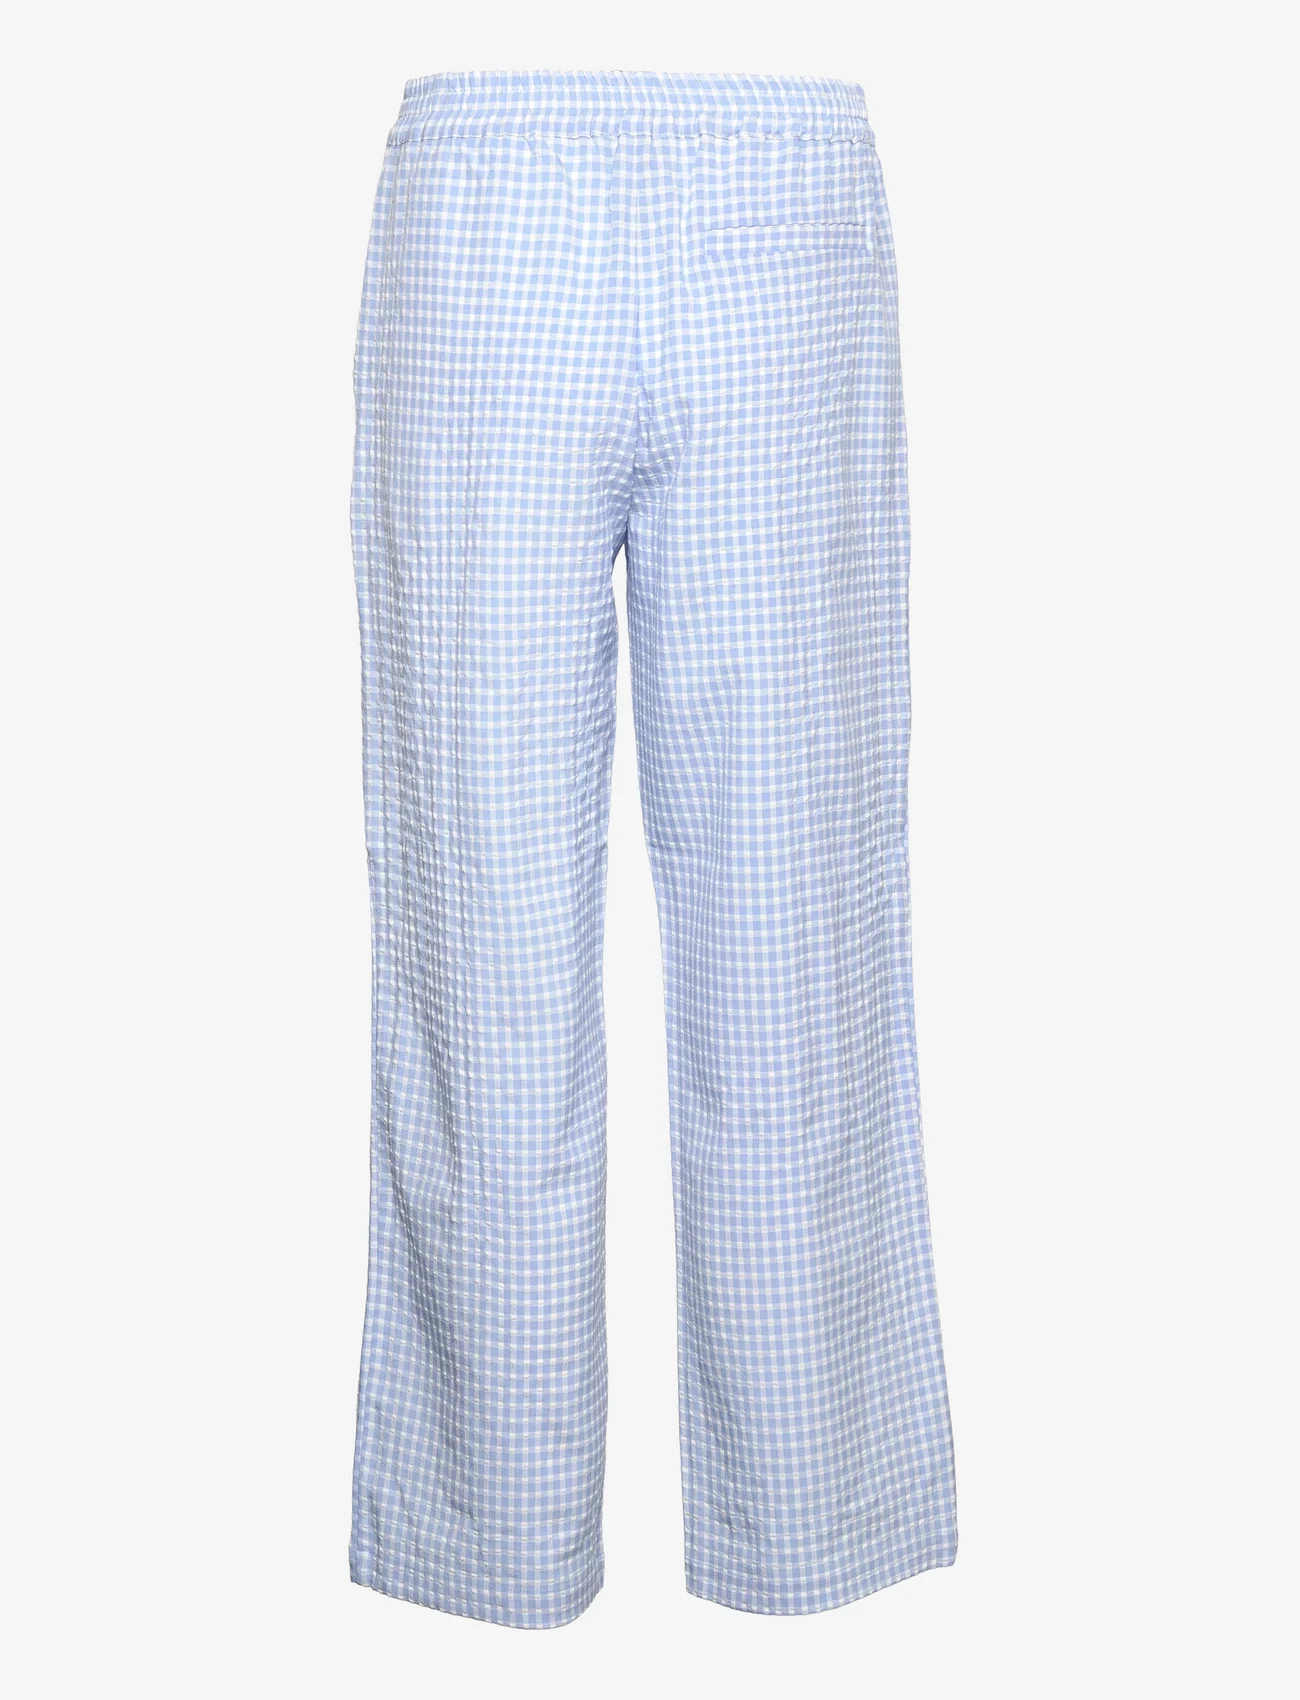 Modström - RimmeMD pants - bukser med lige ben - light blue check - 1